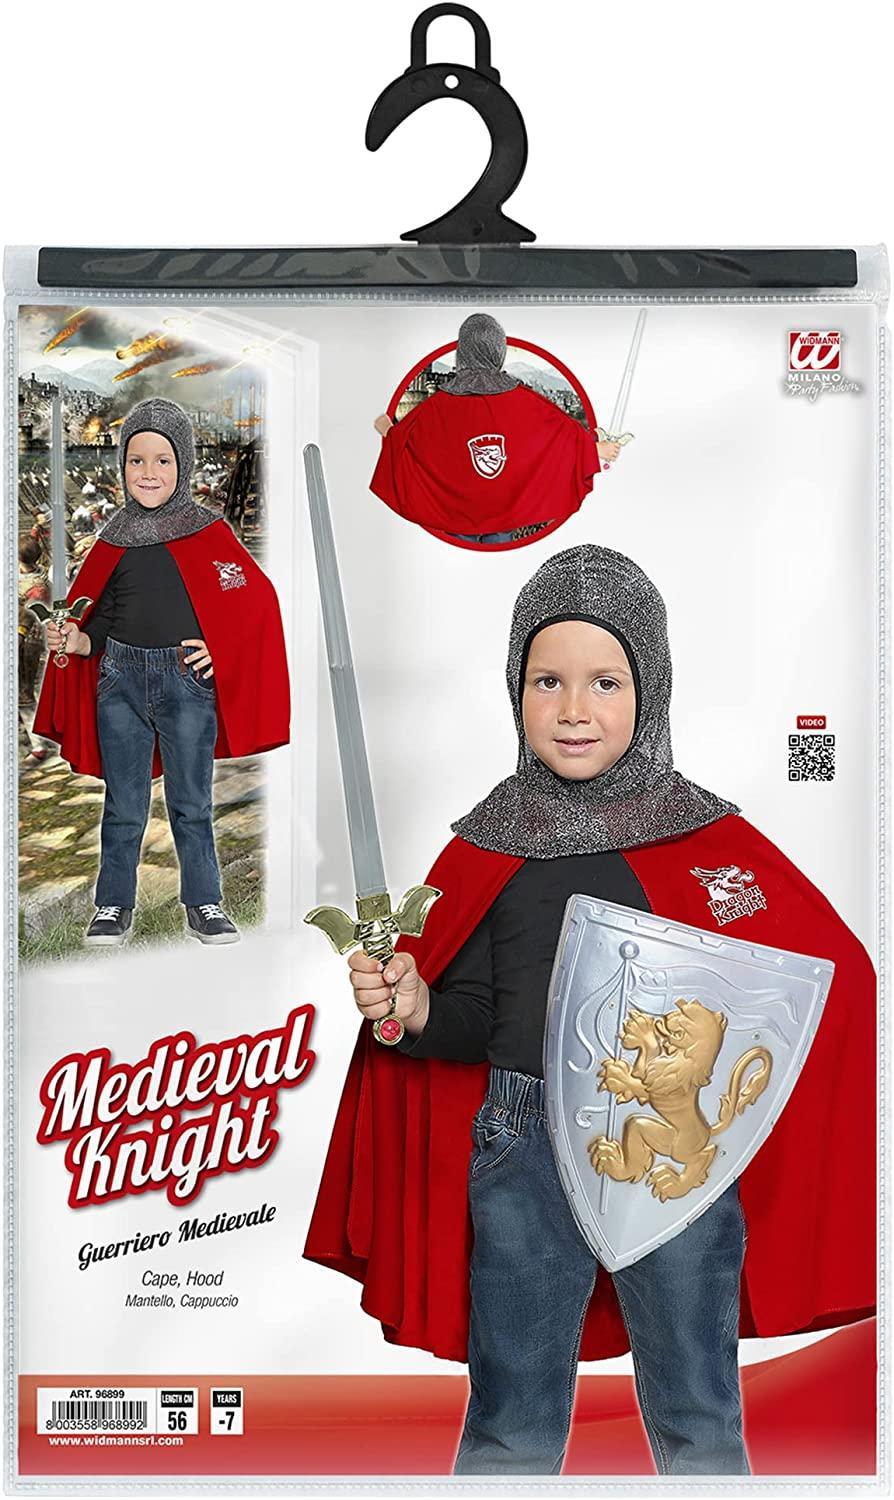 widmann costume guerriero medievale taglia 7 anni